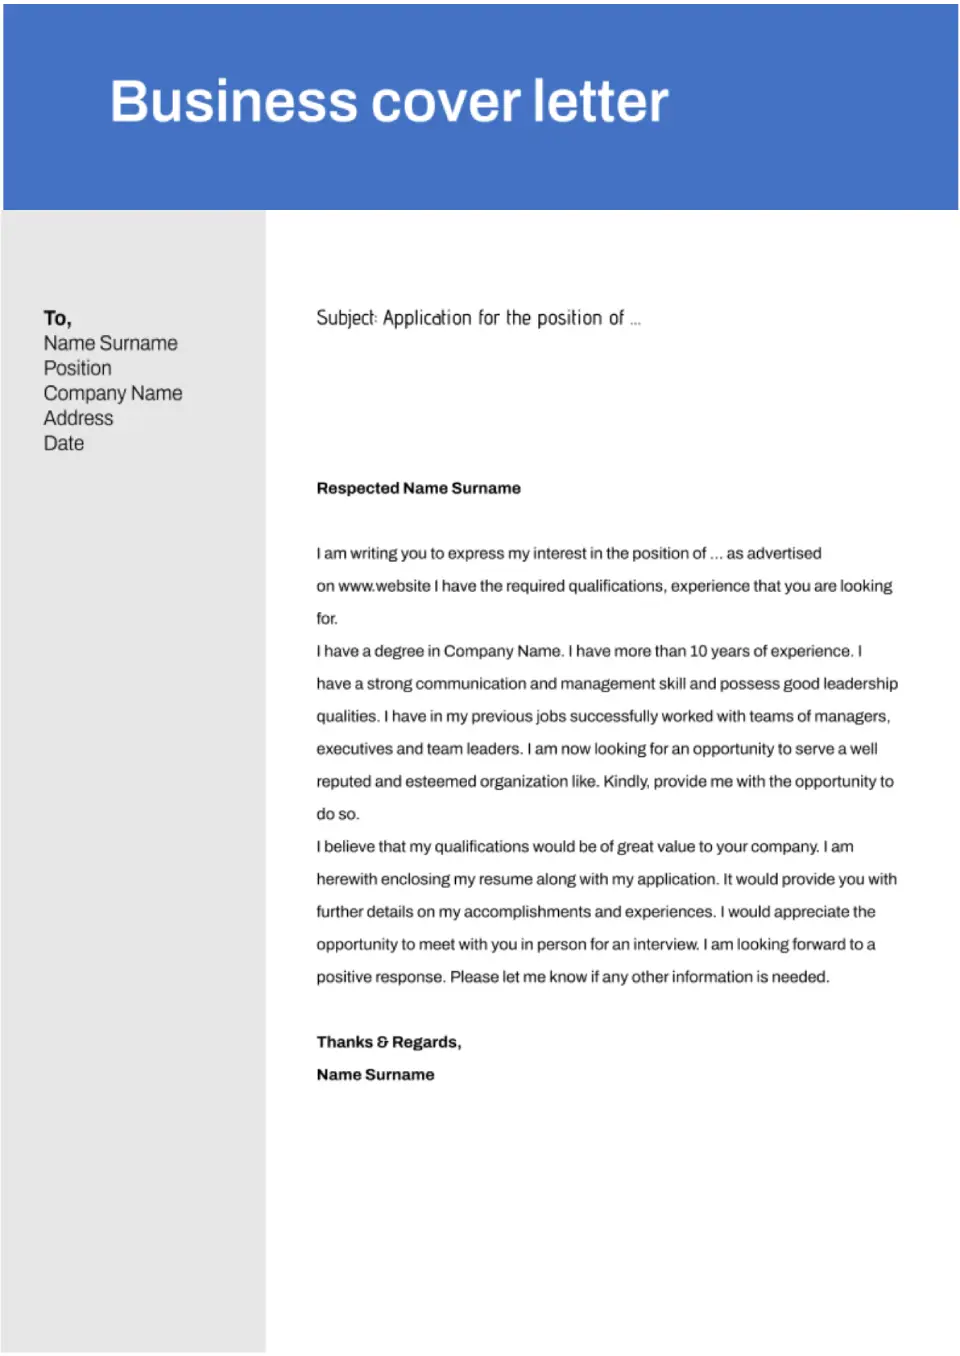 Business cover letter for Google Docs